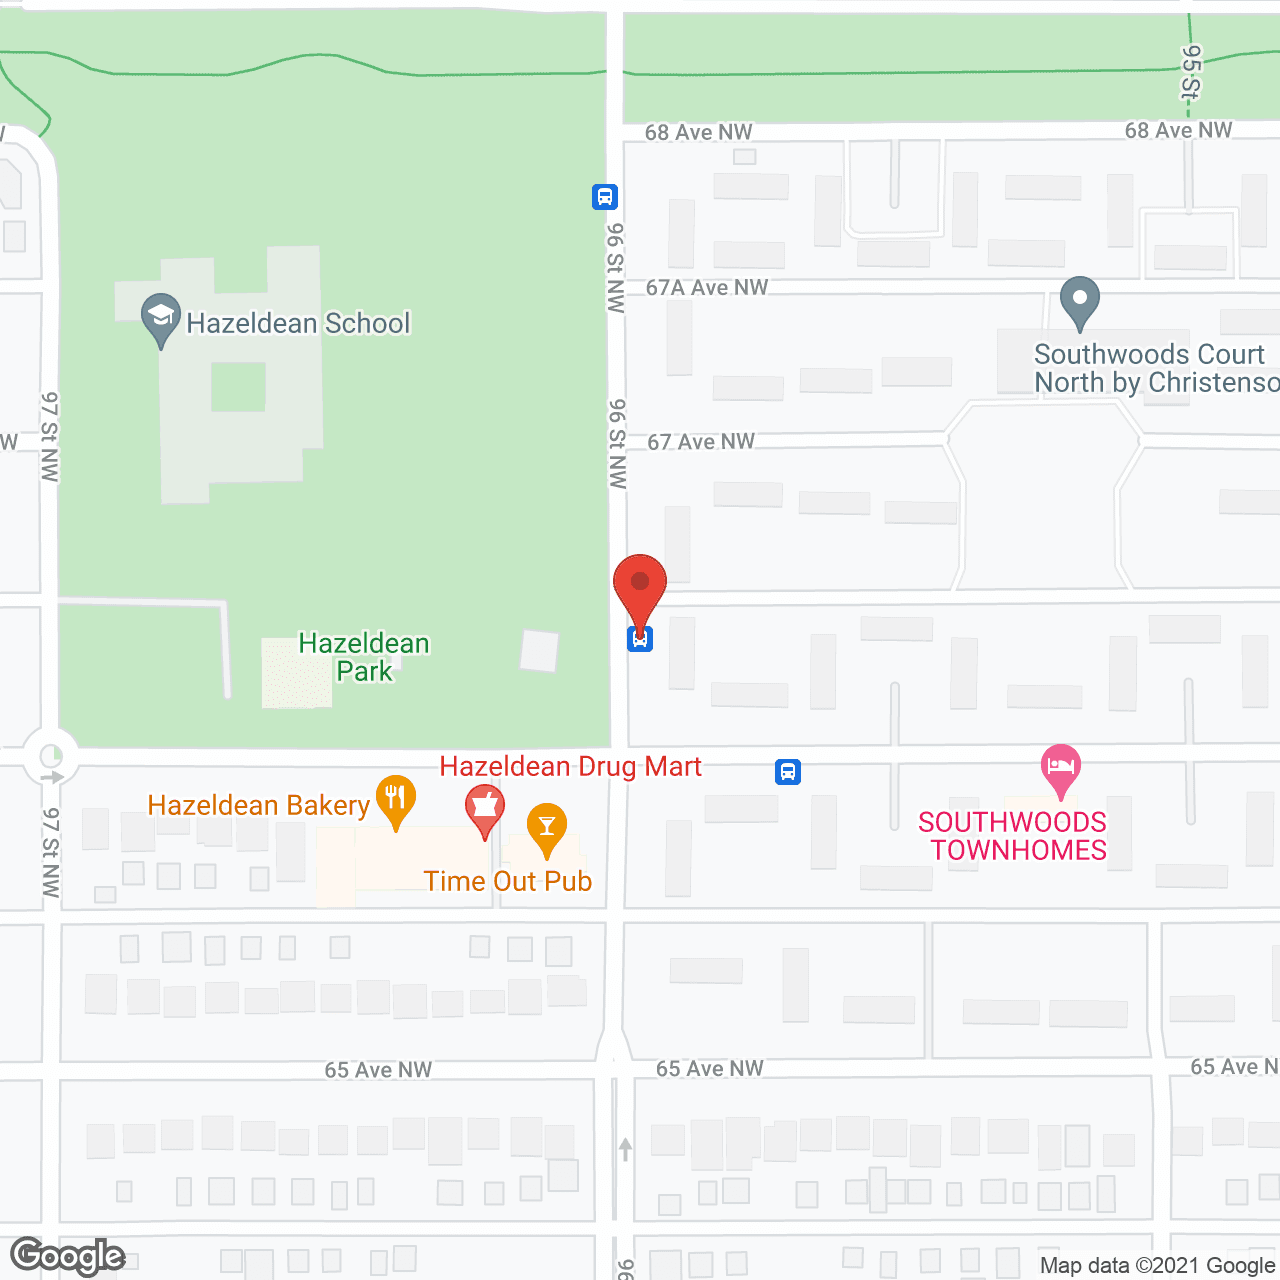 Southwoods Village in google map